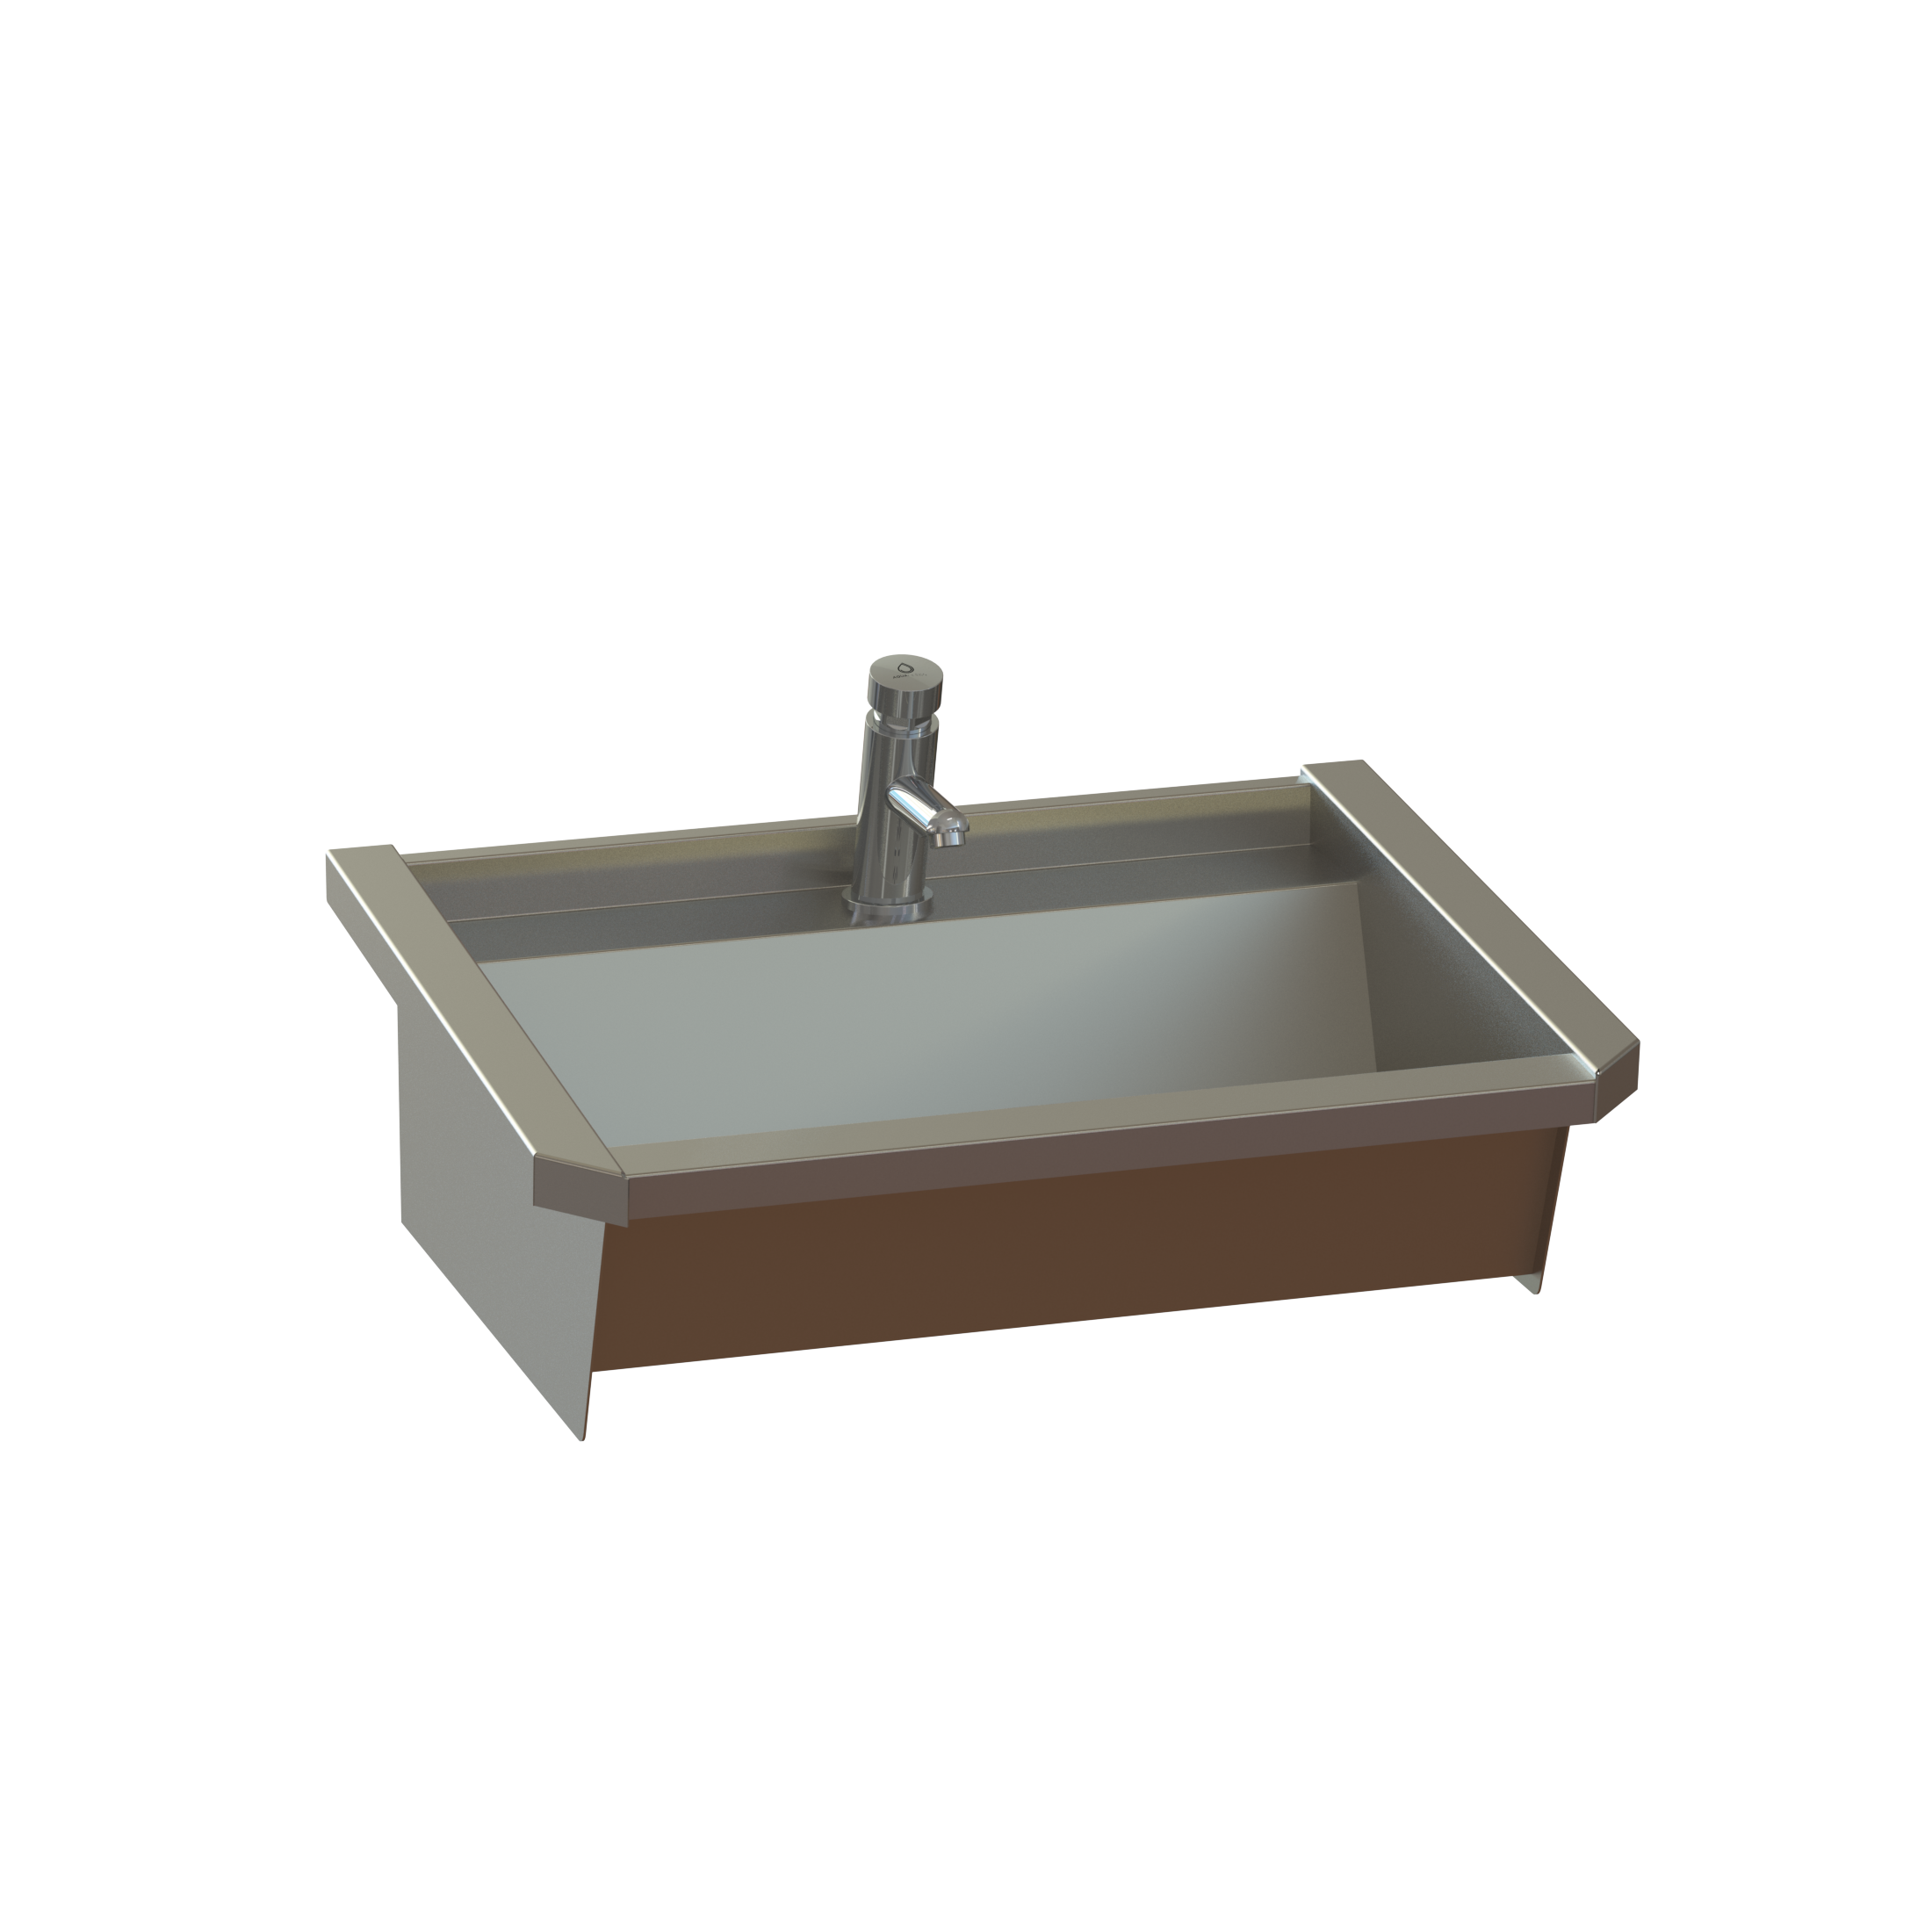 51 - Series 5.0  Washbasin Trough Sink Single User Stainless Steel Hand Wash Station